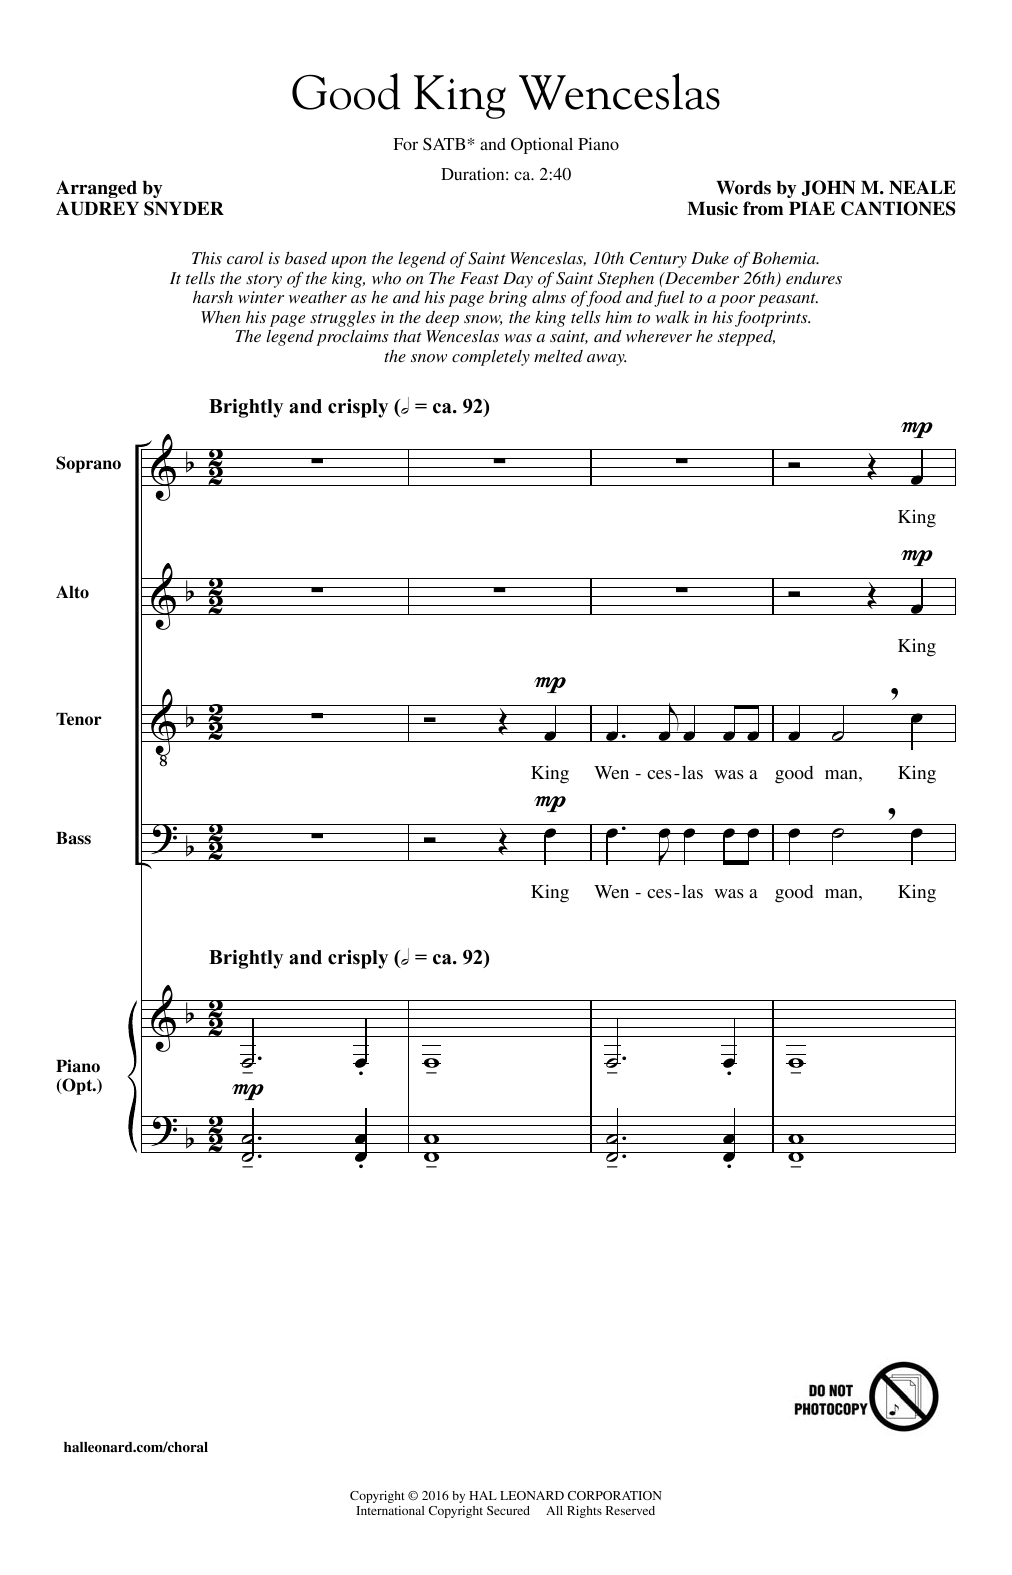 Audrey Snyder Good King Wenceslas Sheet Music Notes & Chords for SATB - Download or Print PDF